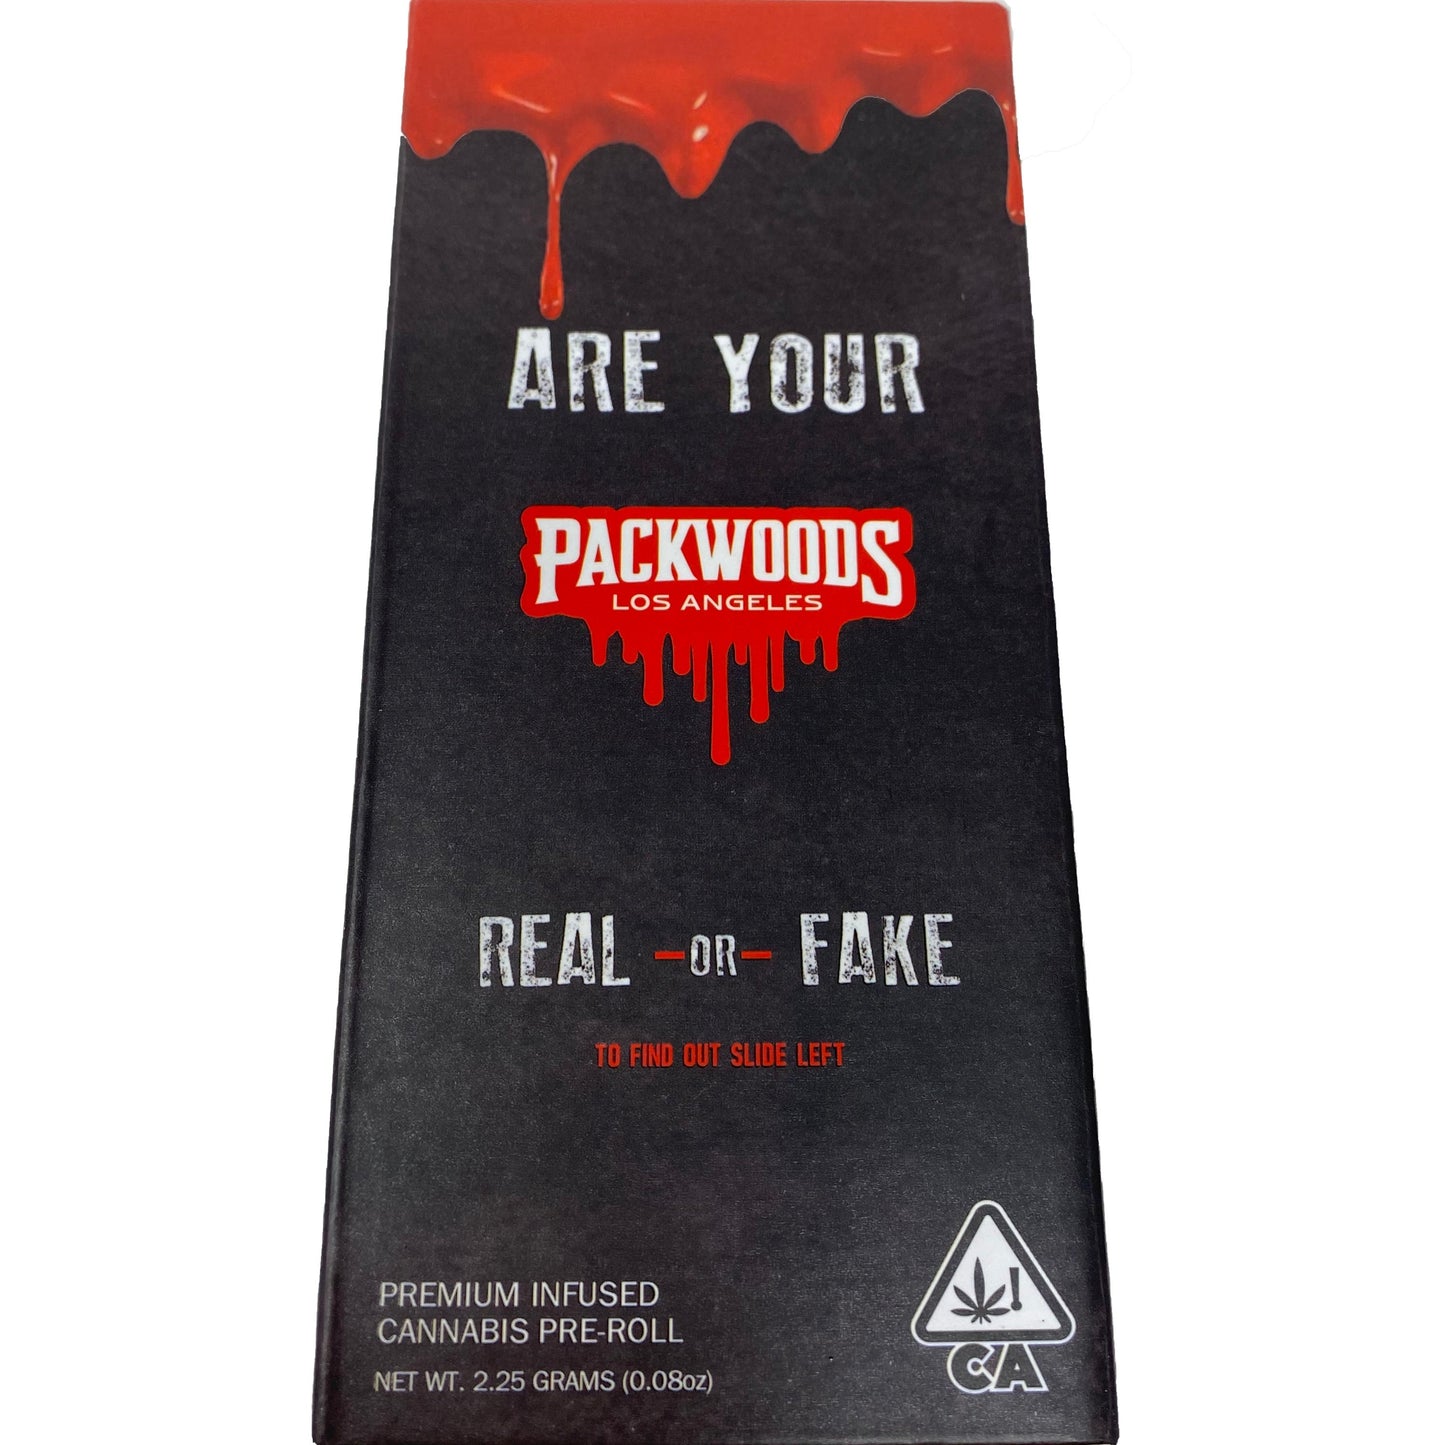 Real or Fake PACKWOODS Pre-roll Tube Packaging